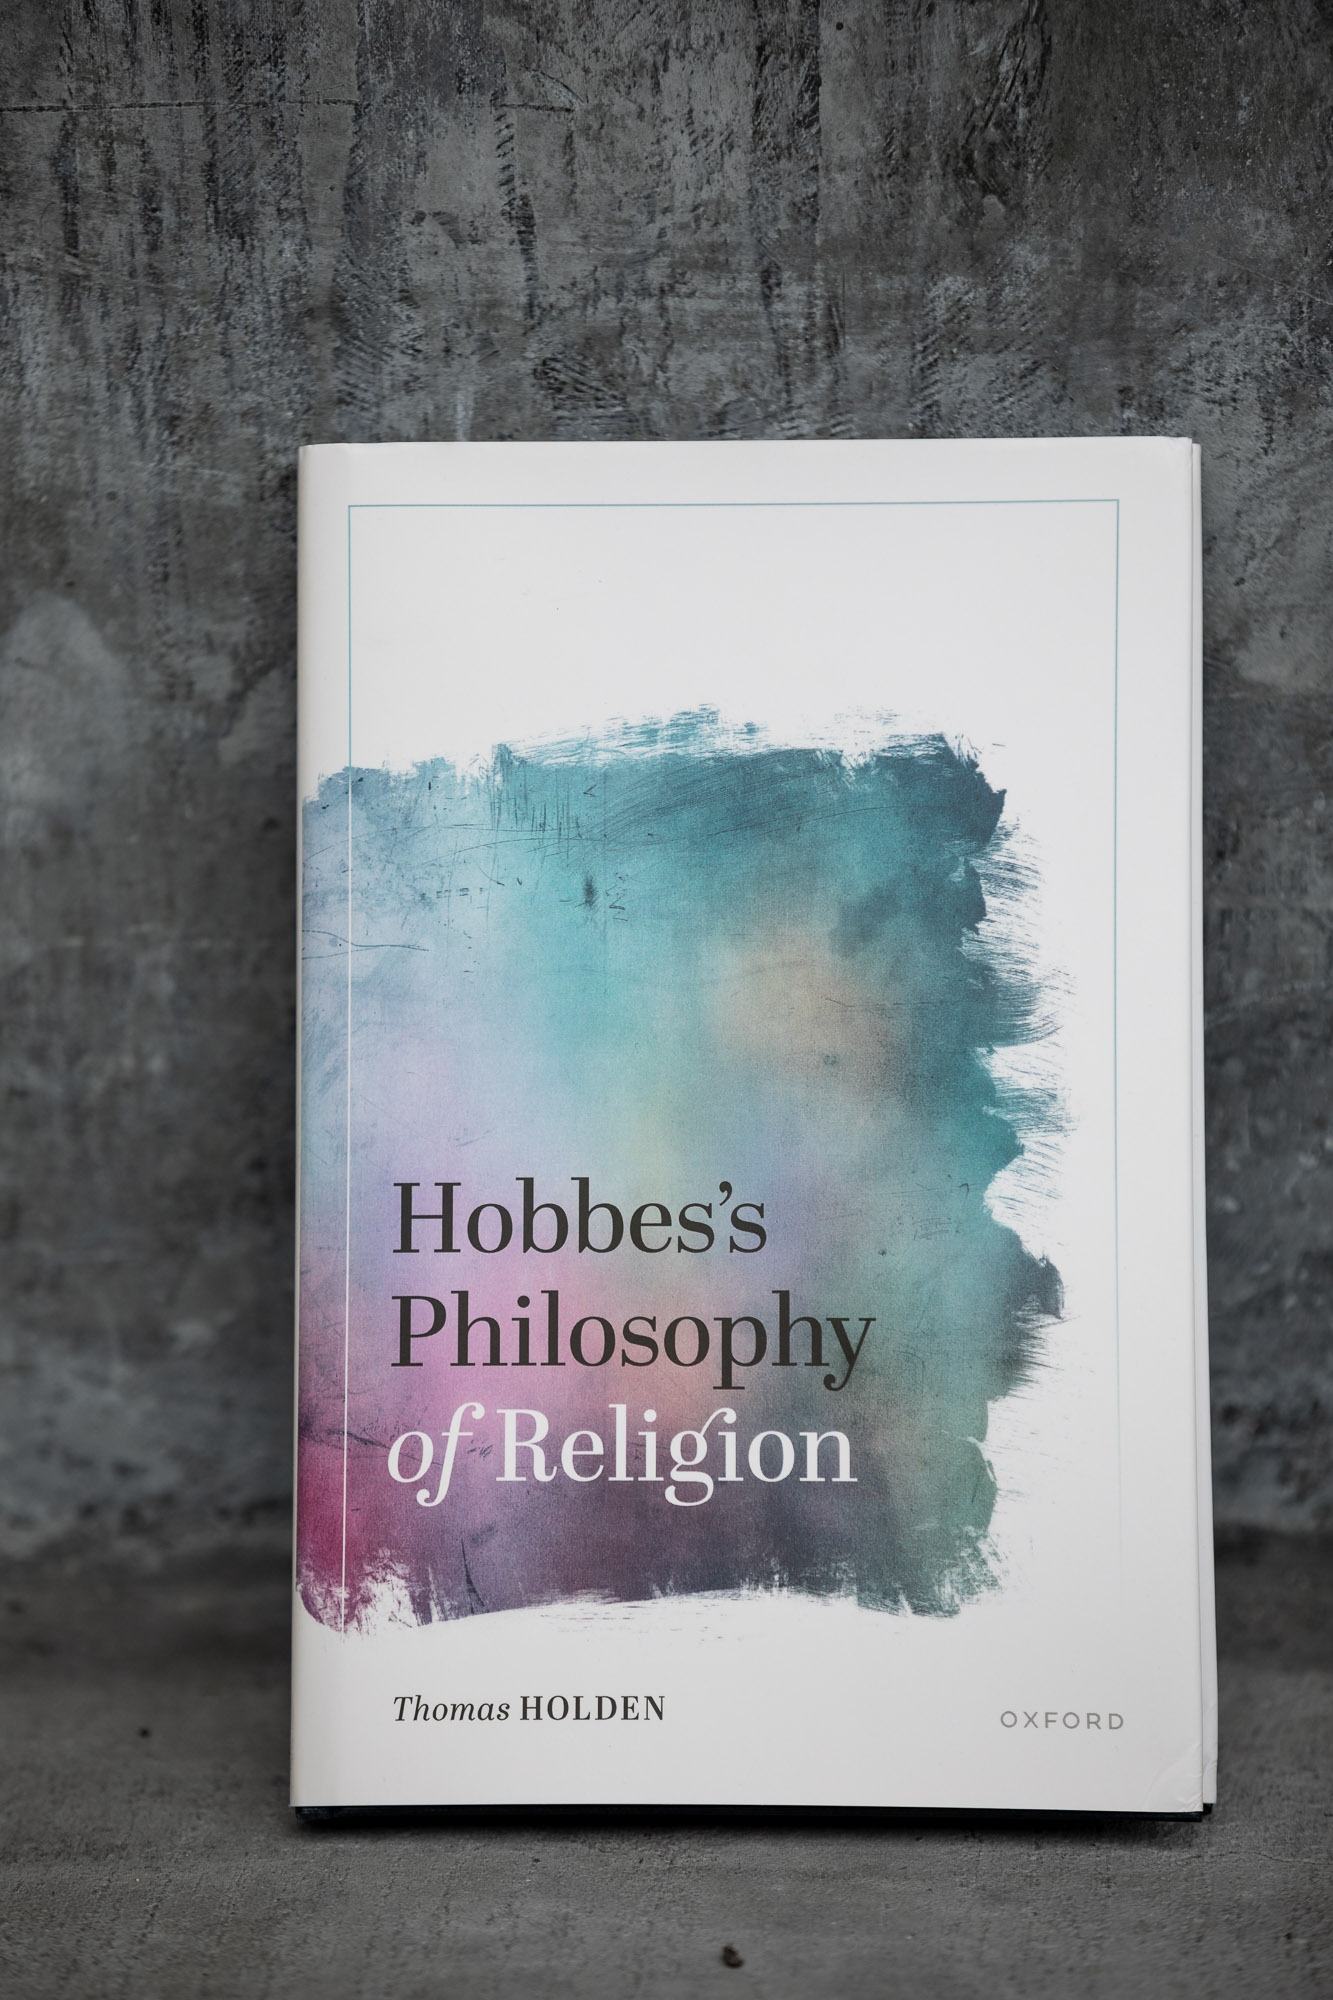 New book offers new interpretation on Thomas Hobbes' philosophy of